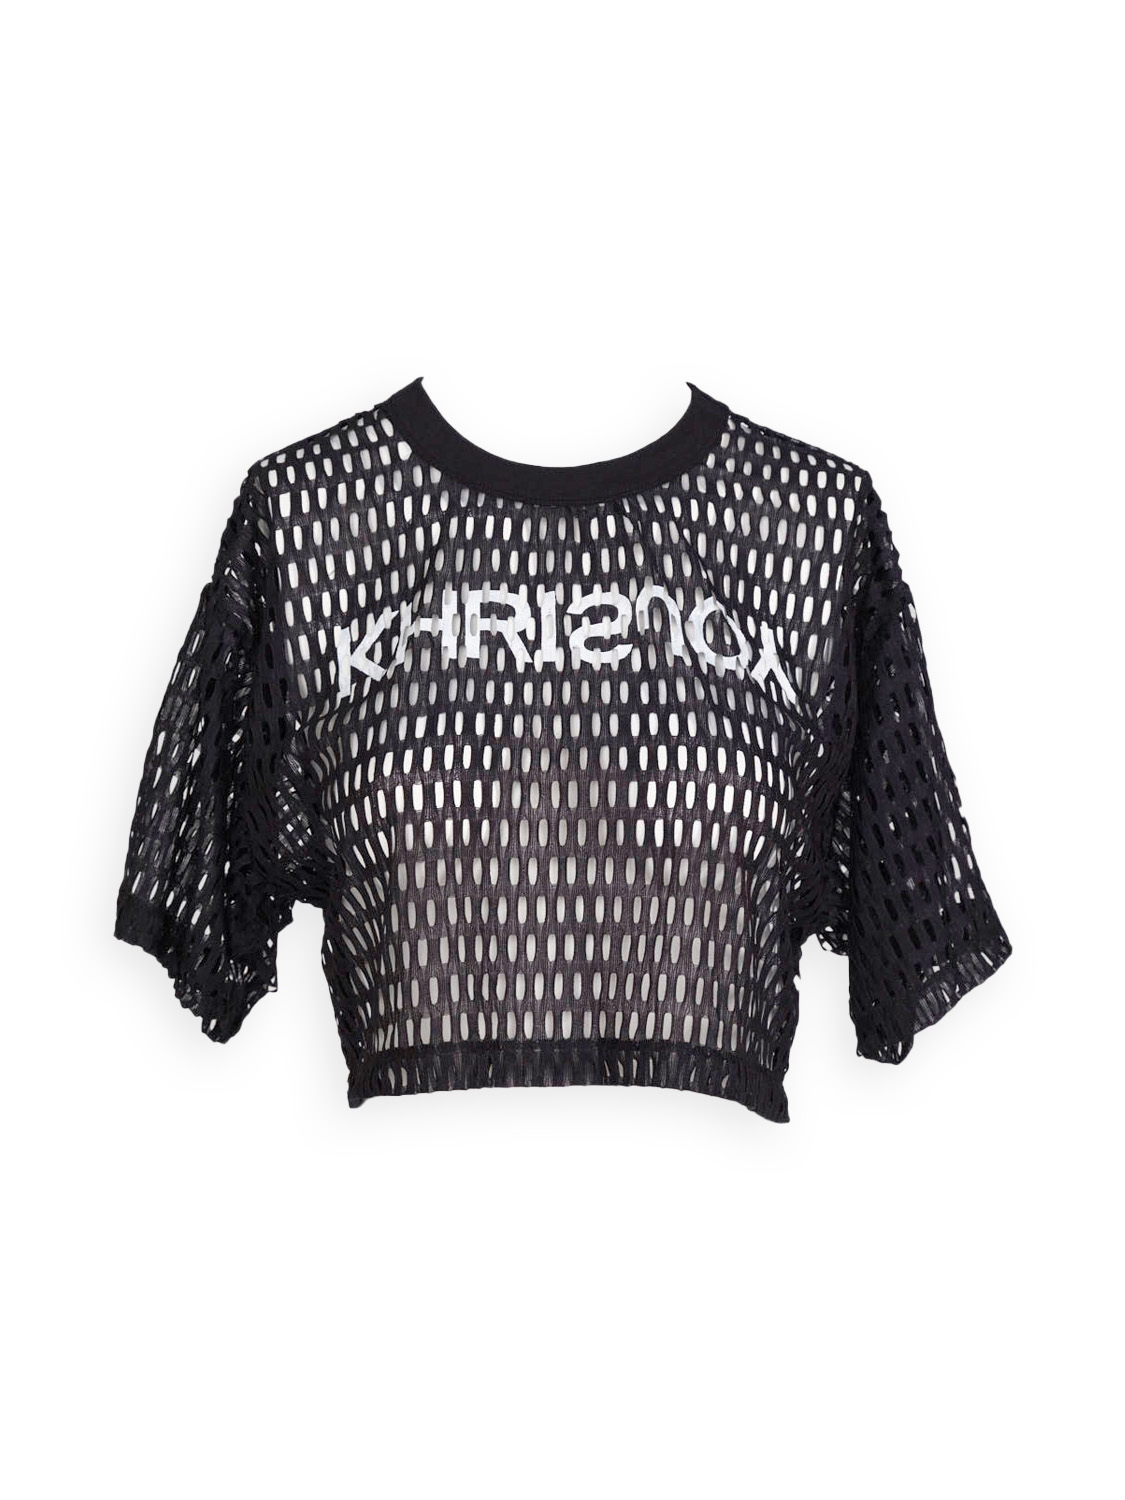 khrisjoy Boxy t-shirt with hole design black XS/S